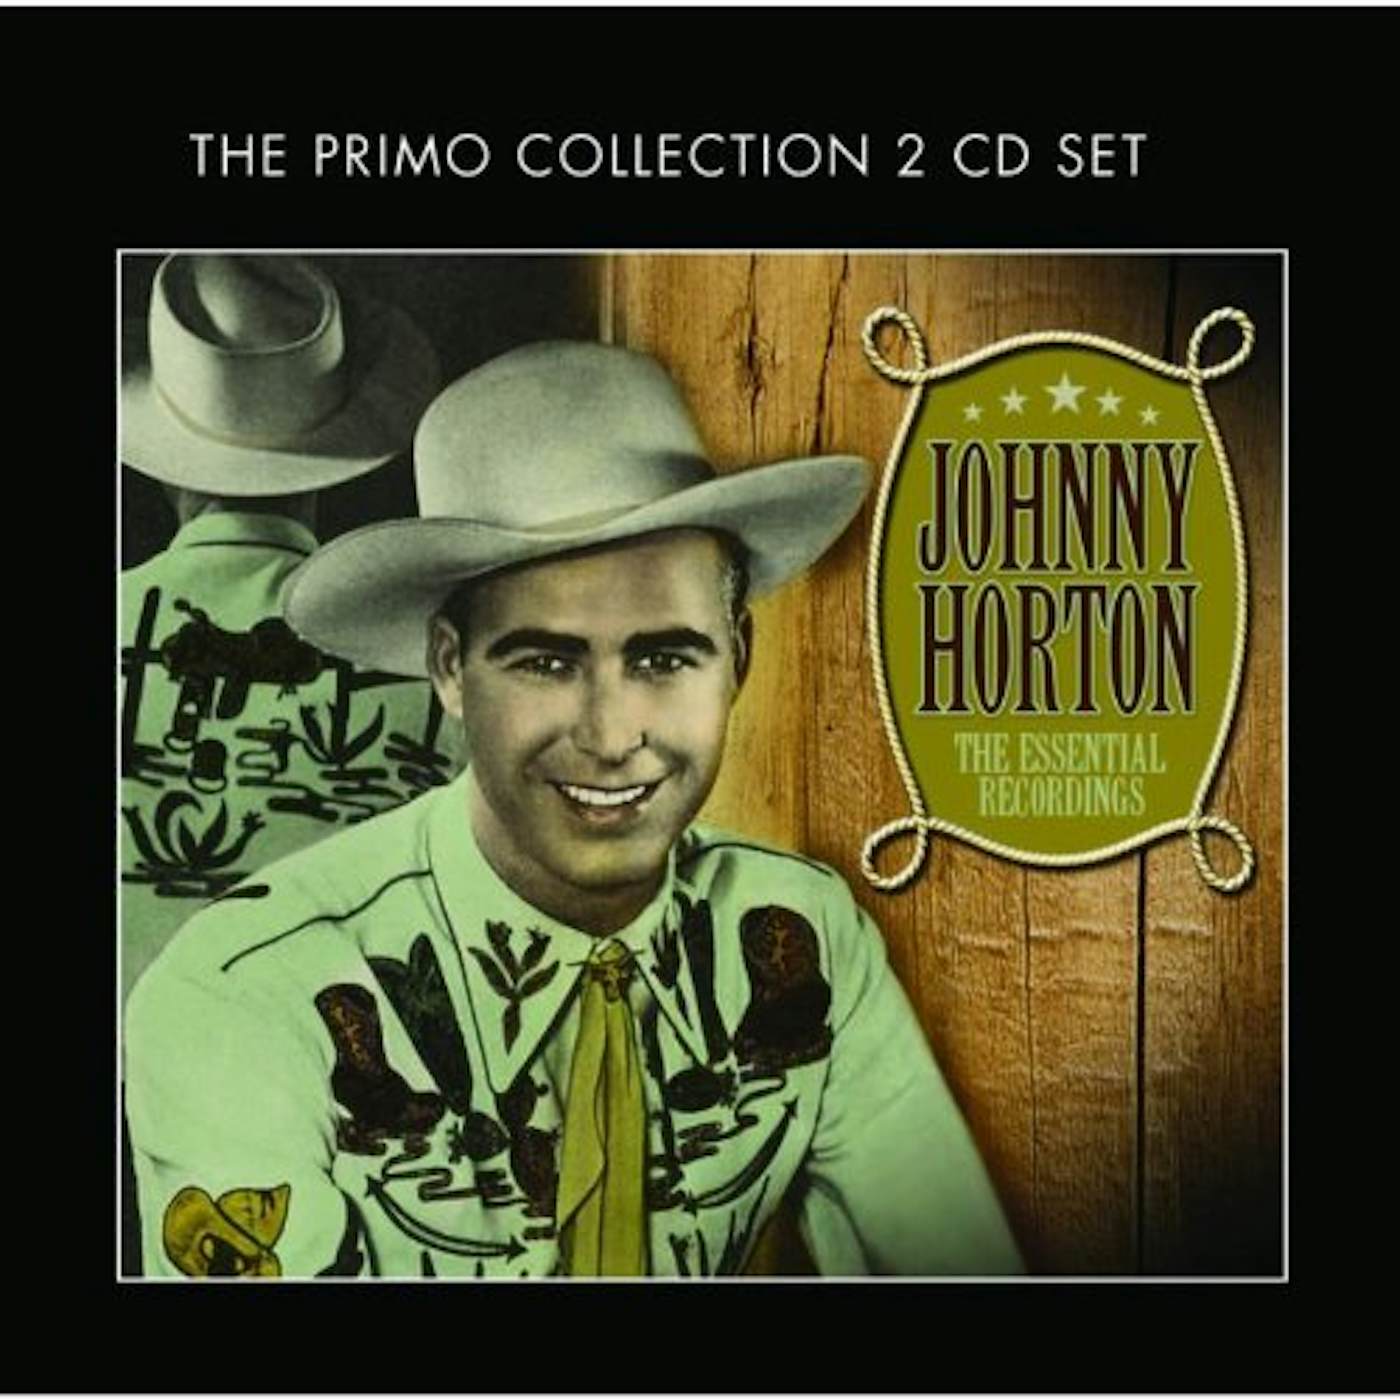 Johnny Horton ESSENTIAL RECORDINGS CD